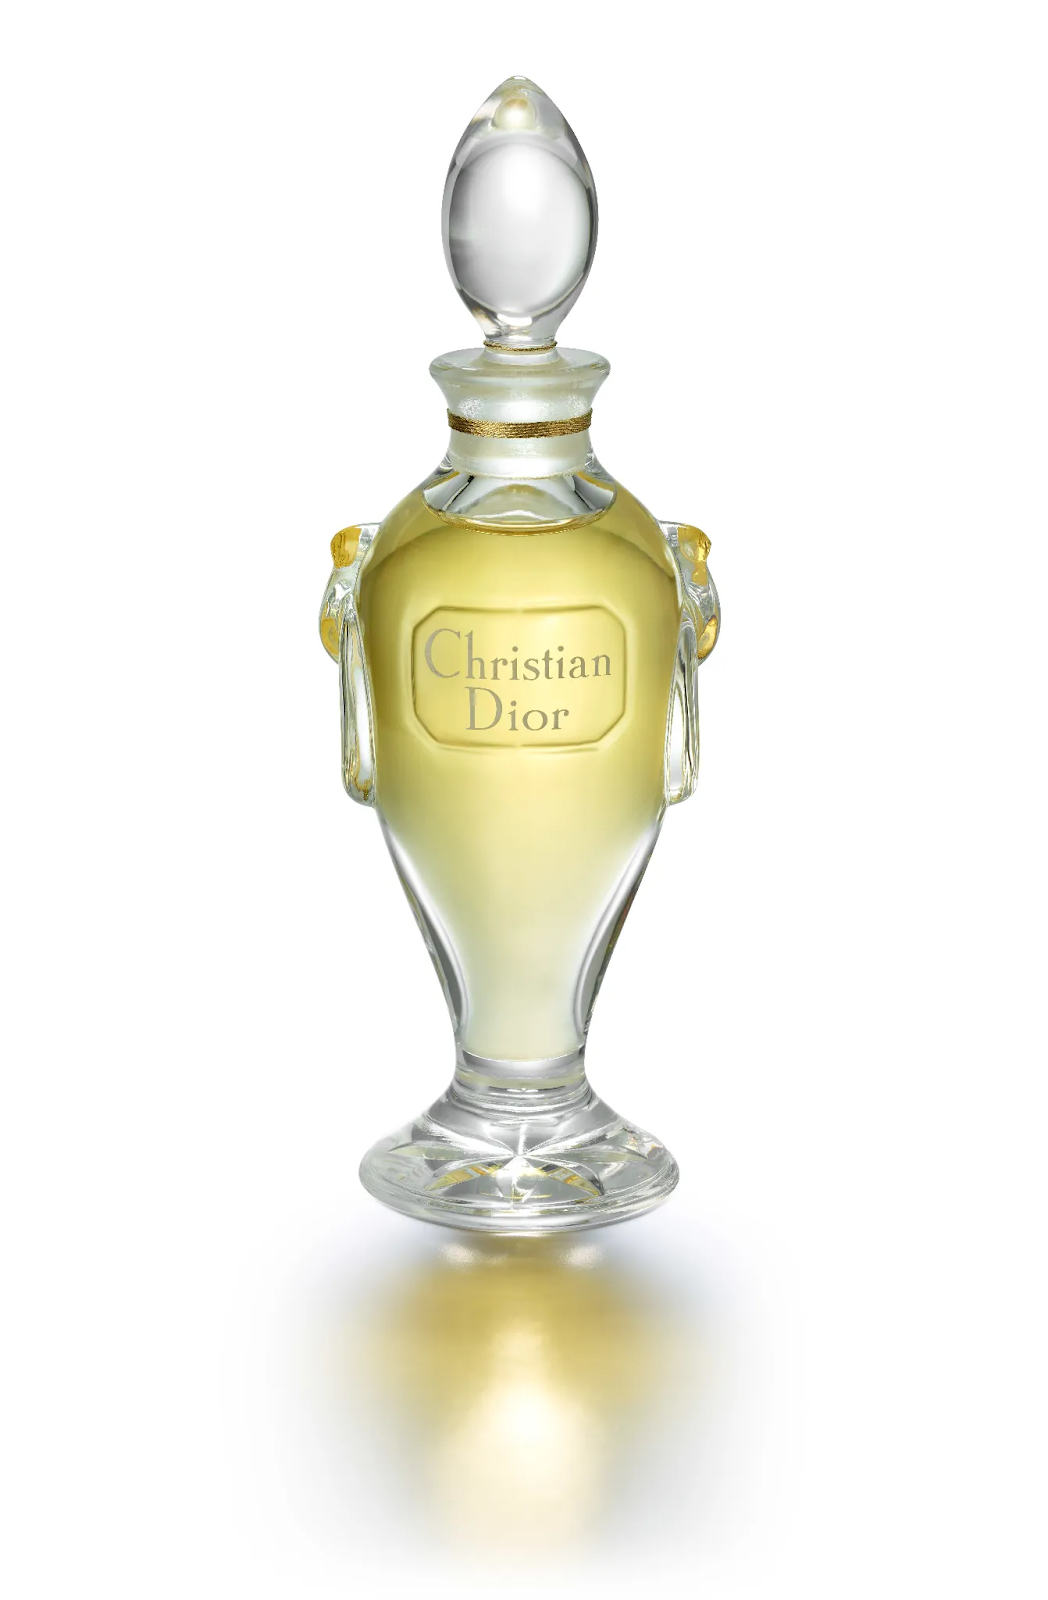 Christian Dior's first perfume Miss Dior